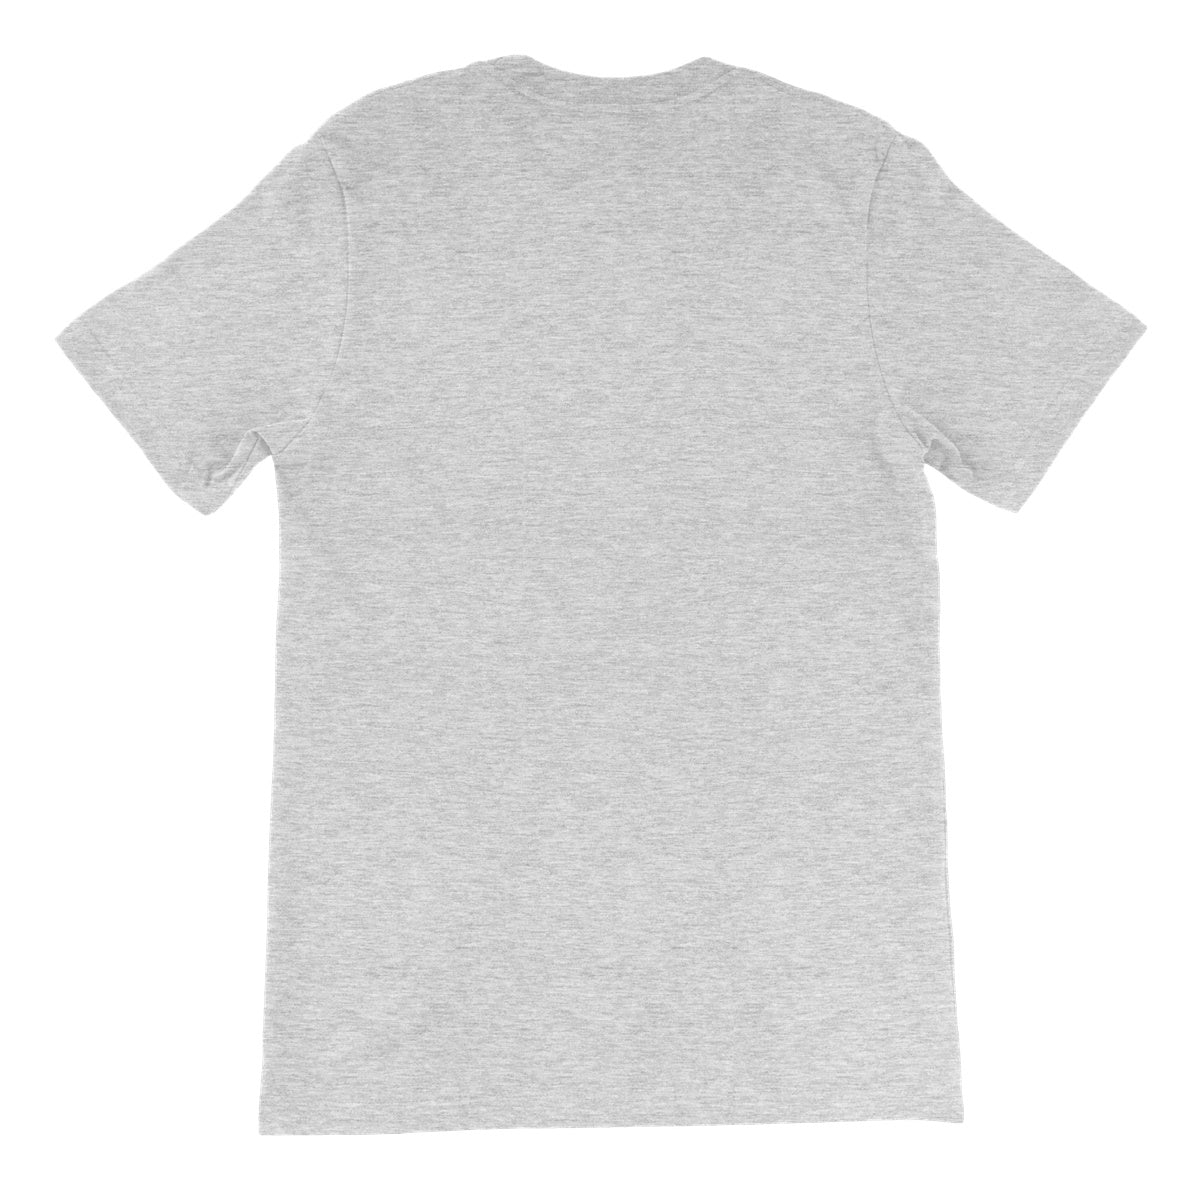 Shad Gaspard Beast CxE Unisex Short Sleeve T-Shirt